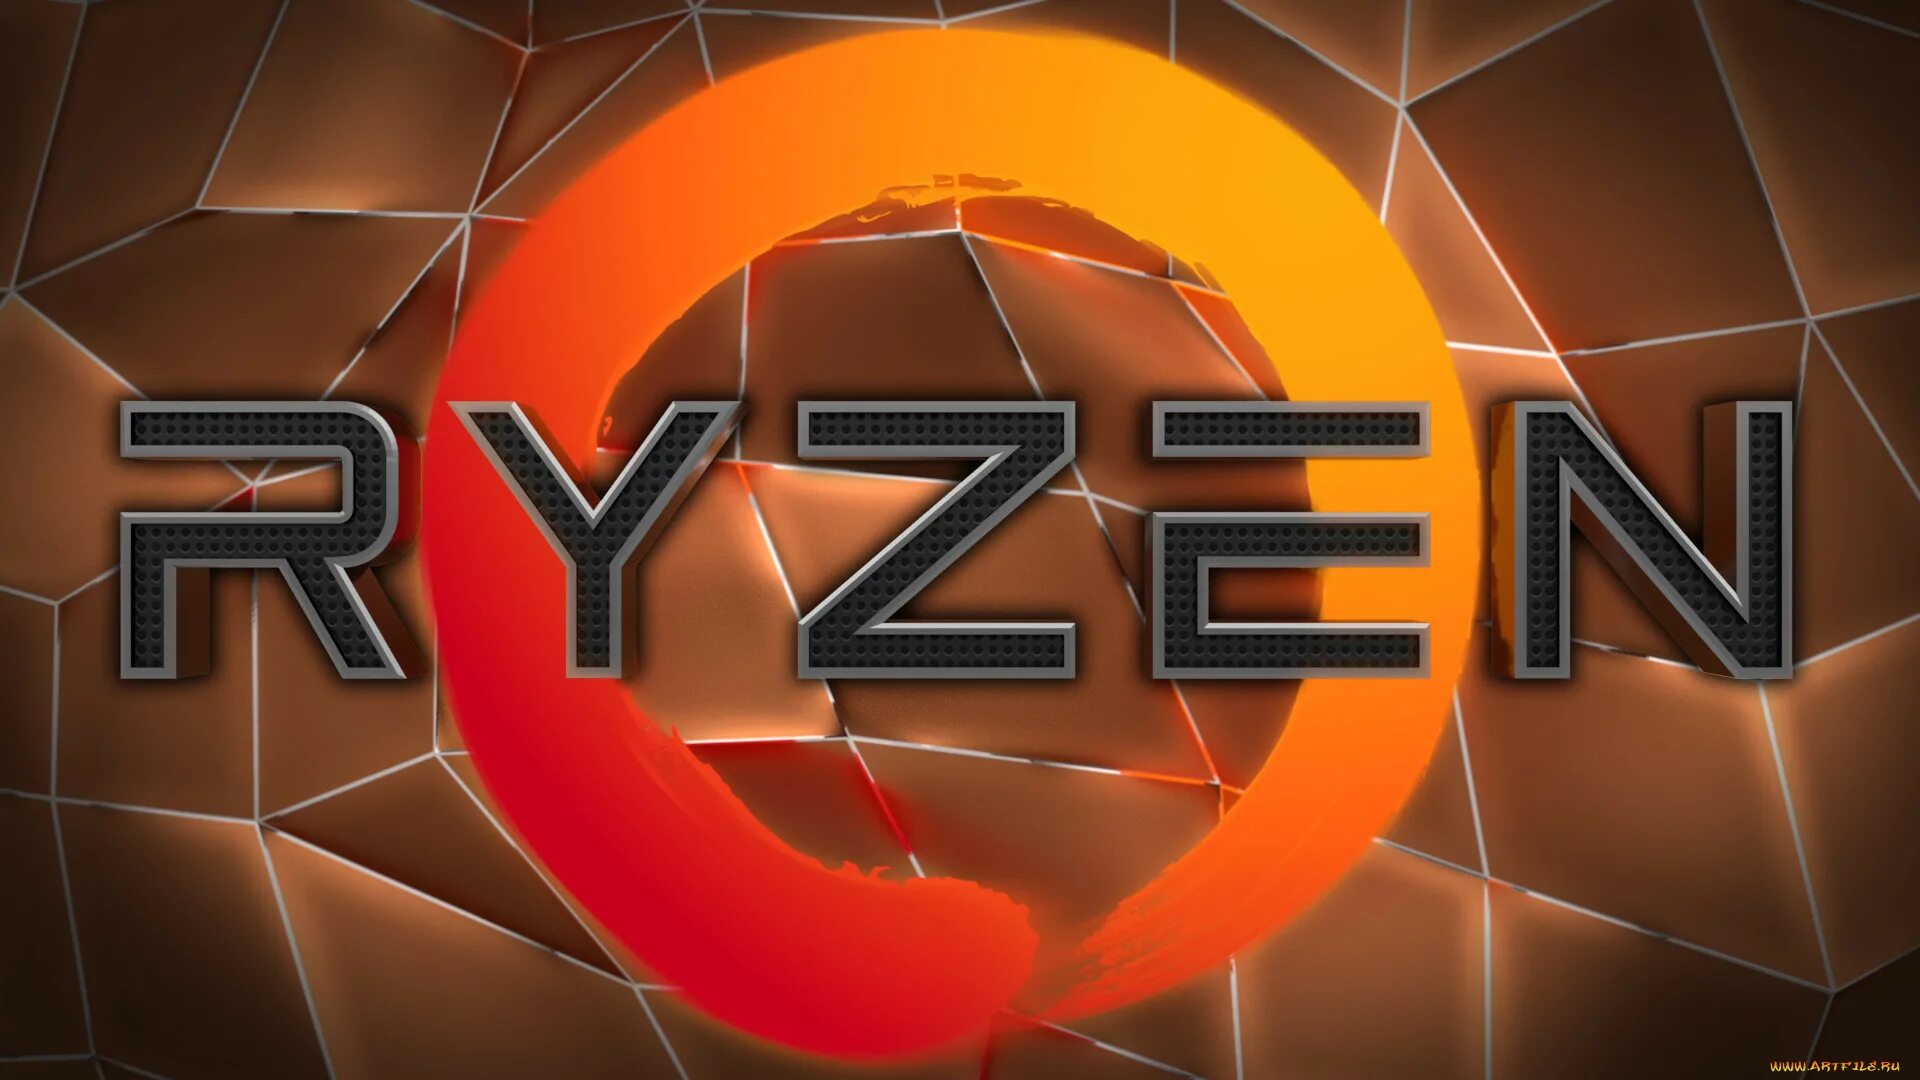 Ryzen 1920x1080. Ryzen логотип. Заставка Ryzen. АМД райзен надпись. Обои AMD Ryzen 1920 1080.